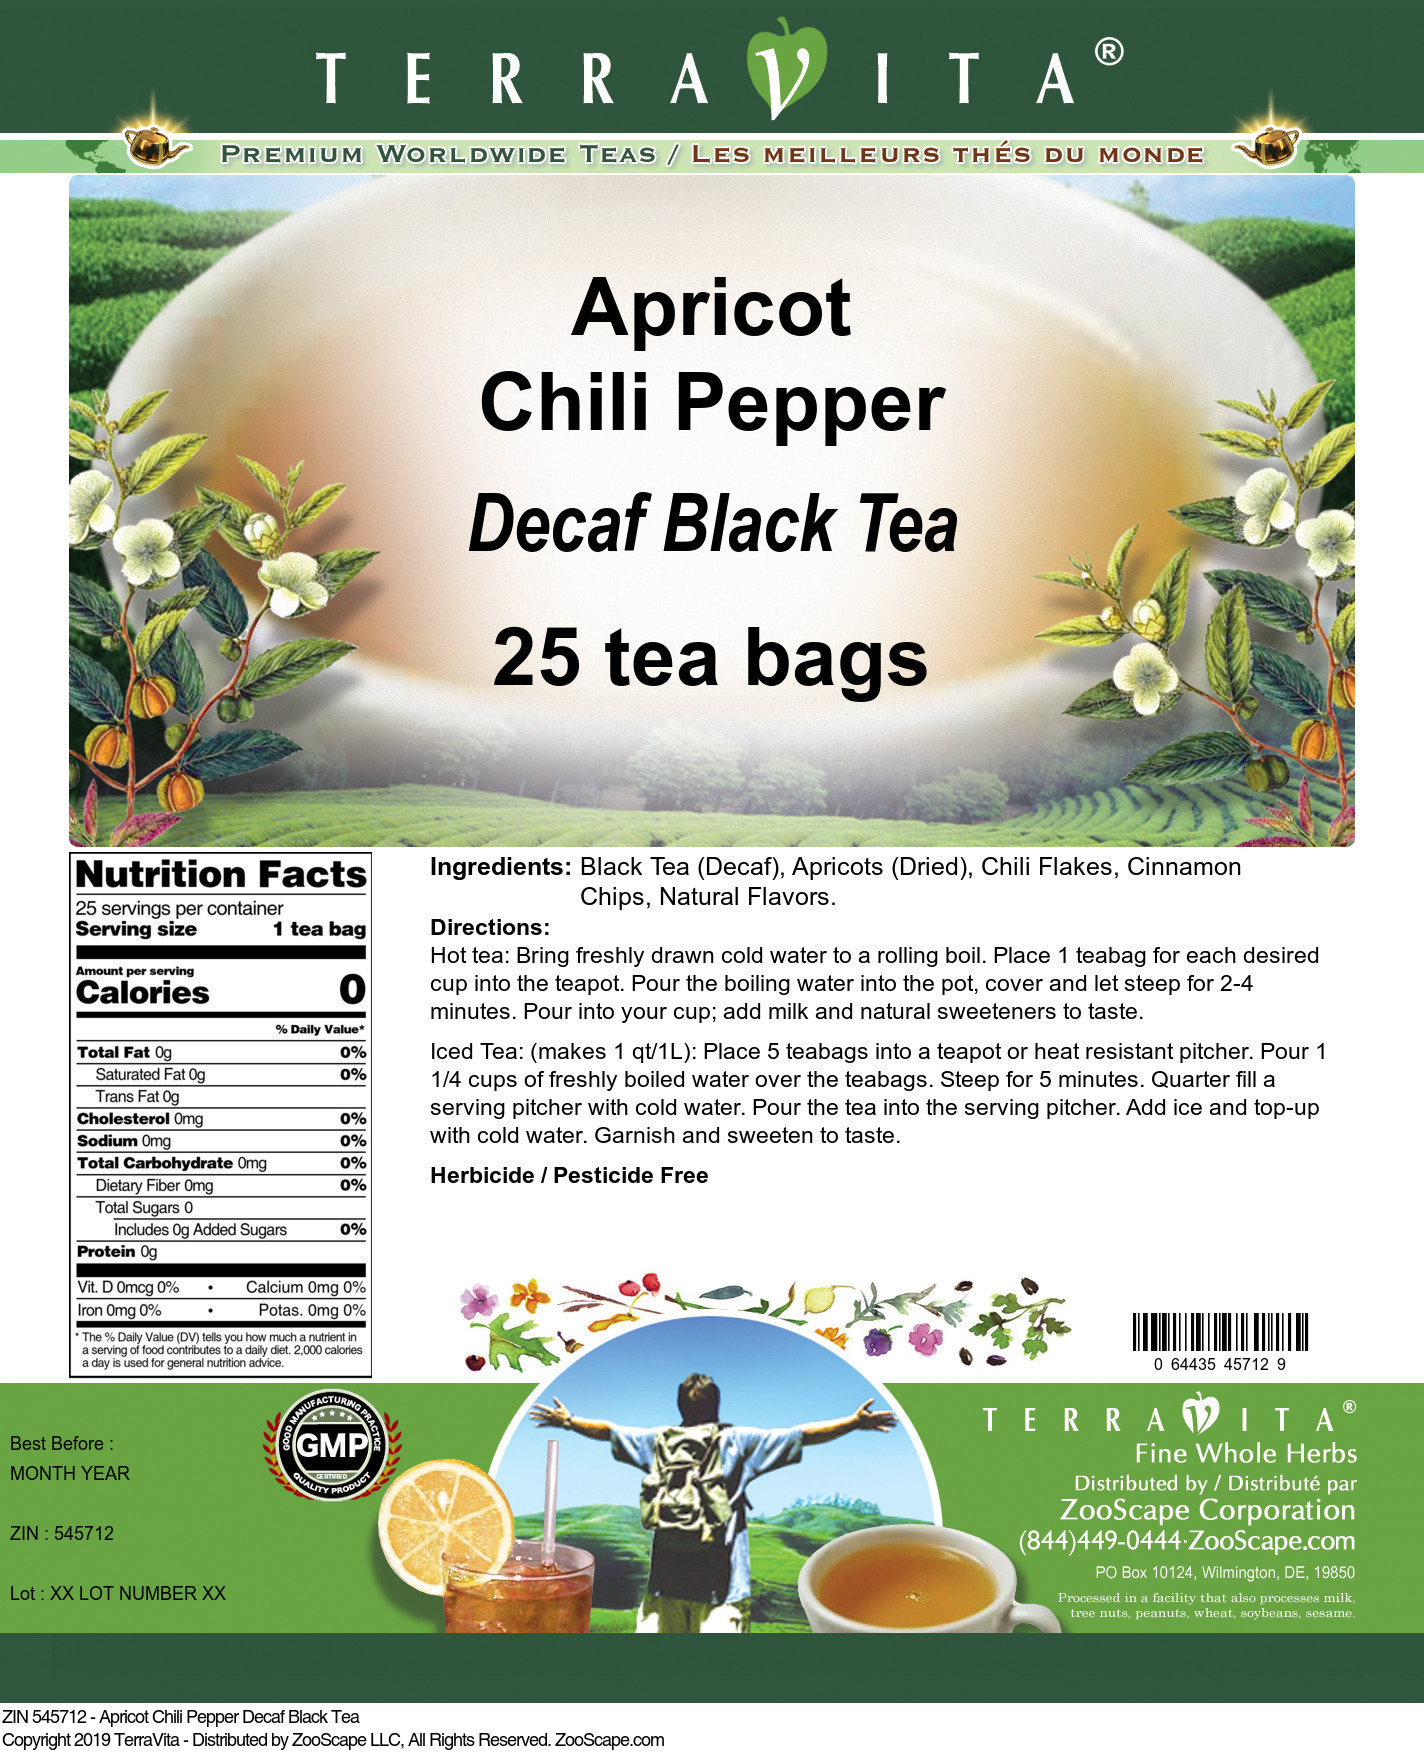 Apricot Chili Pepper Decaf Black Tea - Label